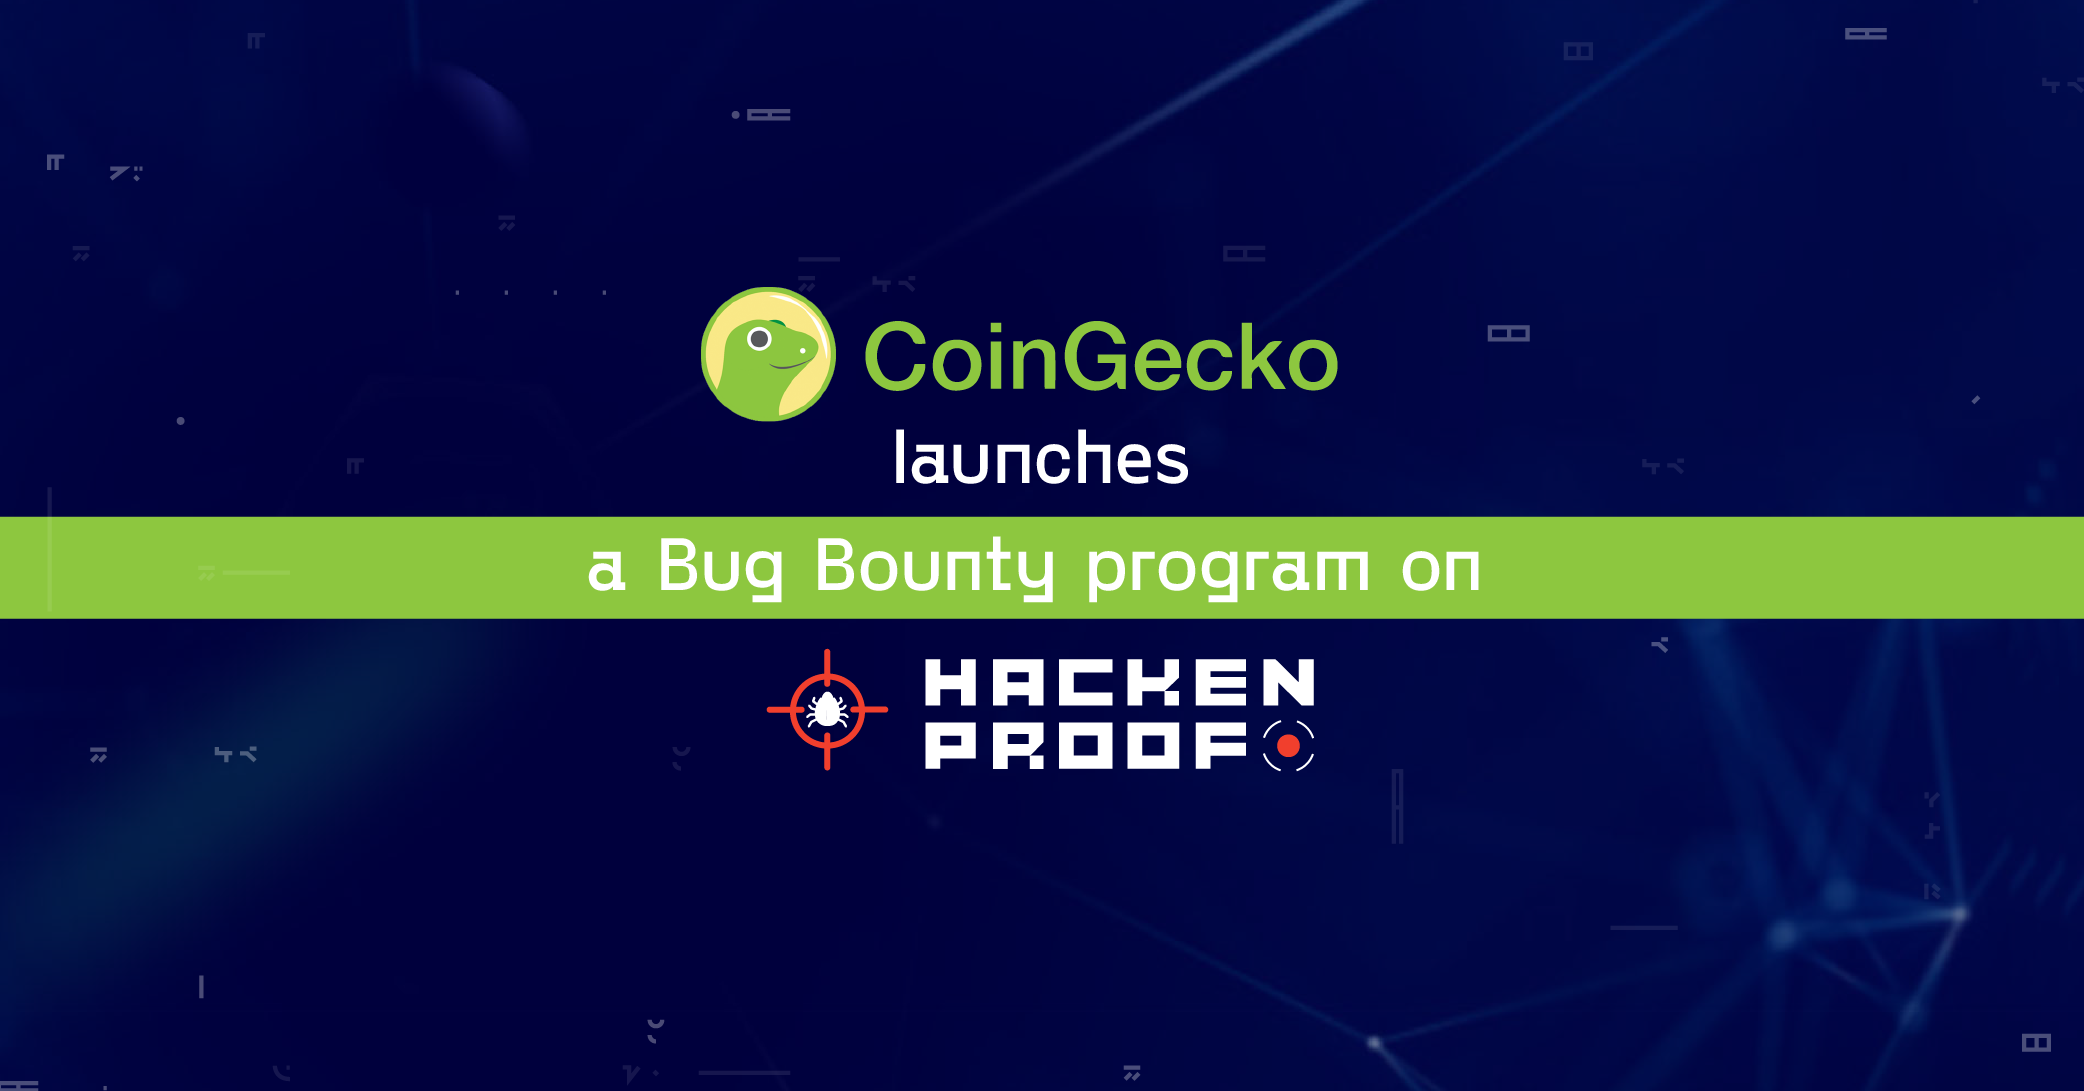 CoinGecko launches a Bug Bounty program on HackenProof